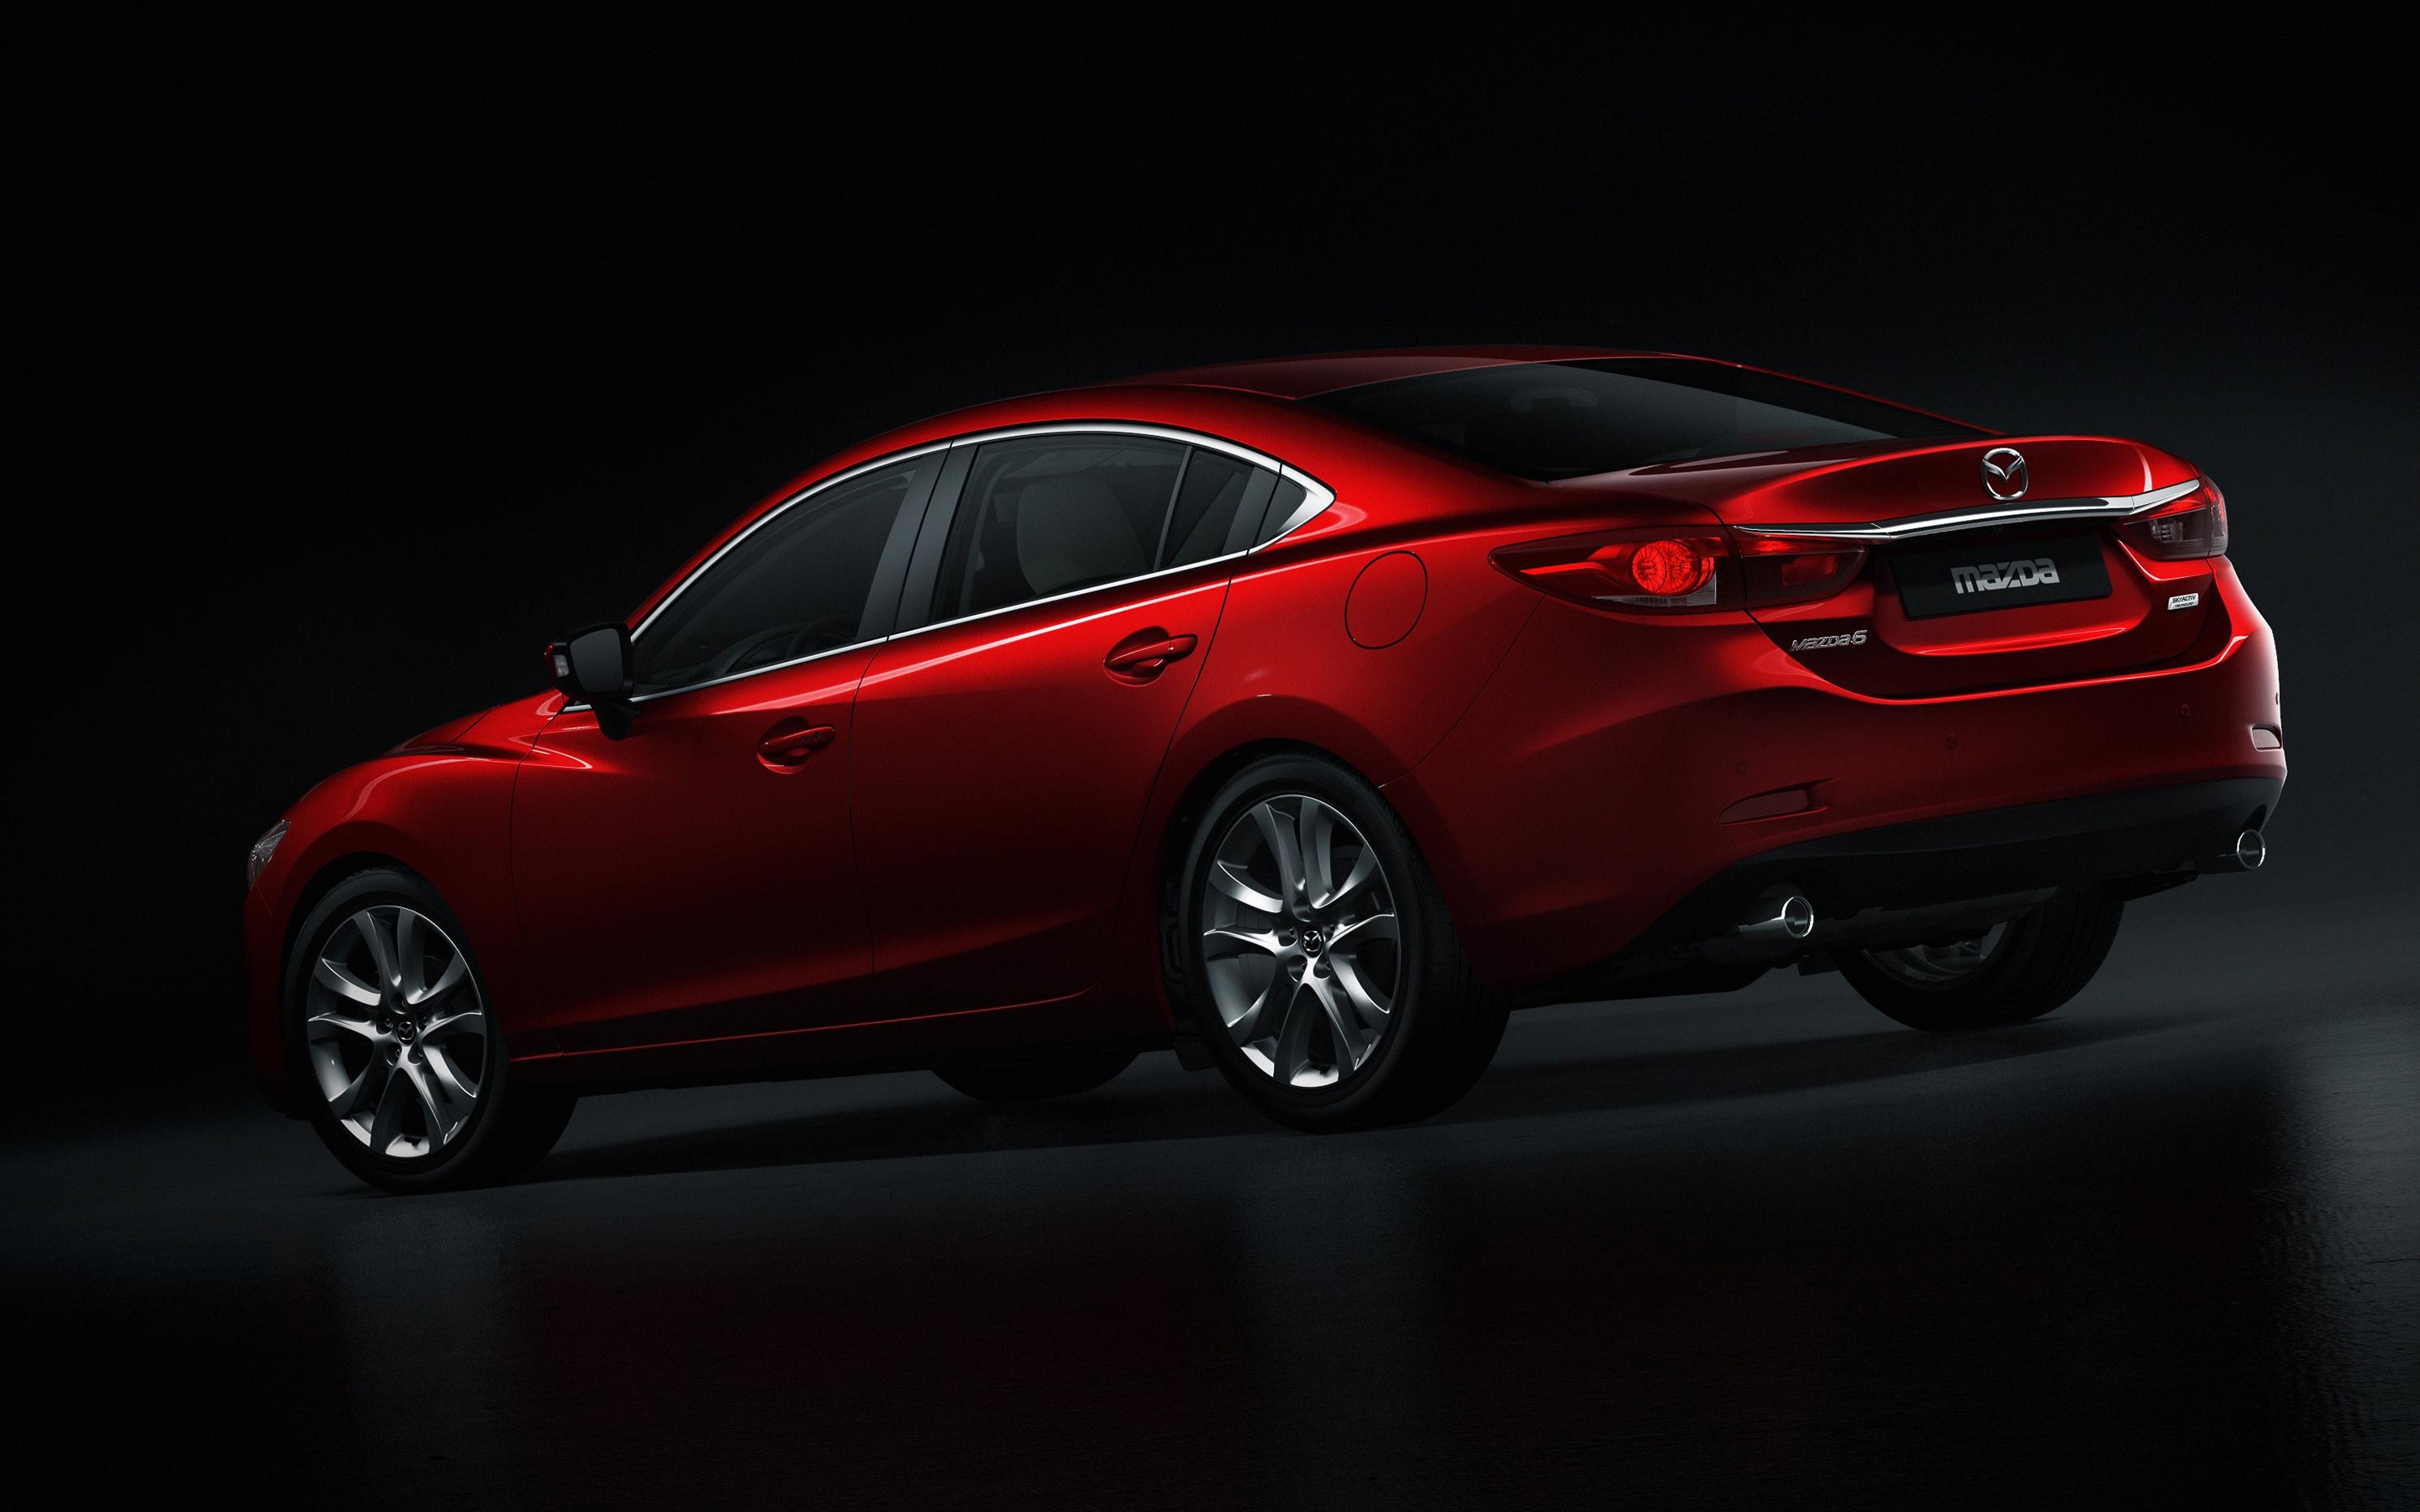 Mazda 6 2014 Rear Studio for 2880 x 1800 Retina Display resolution